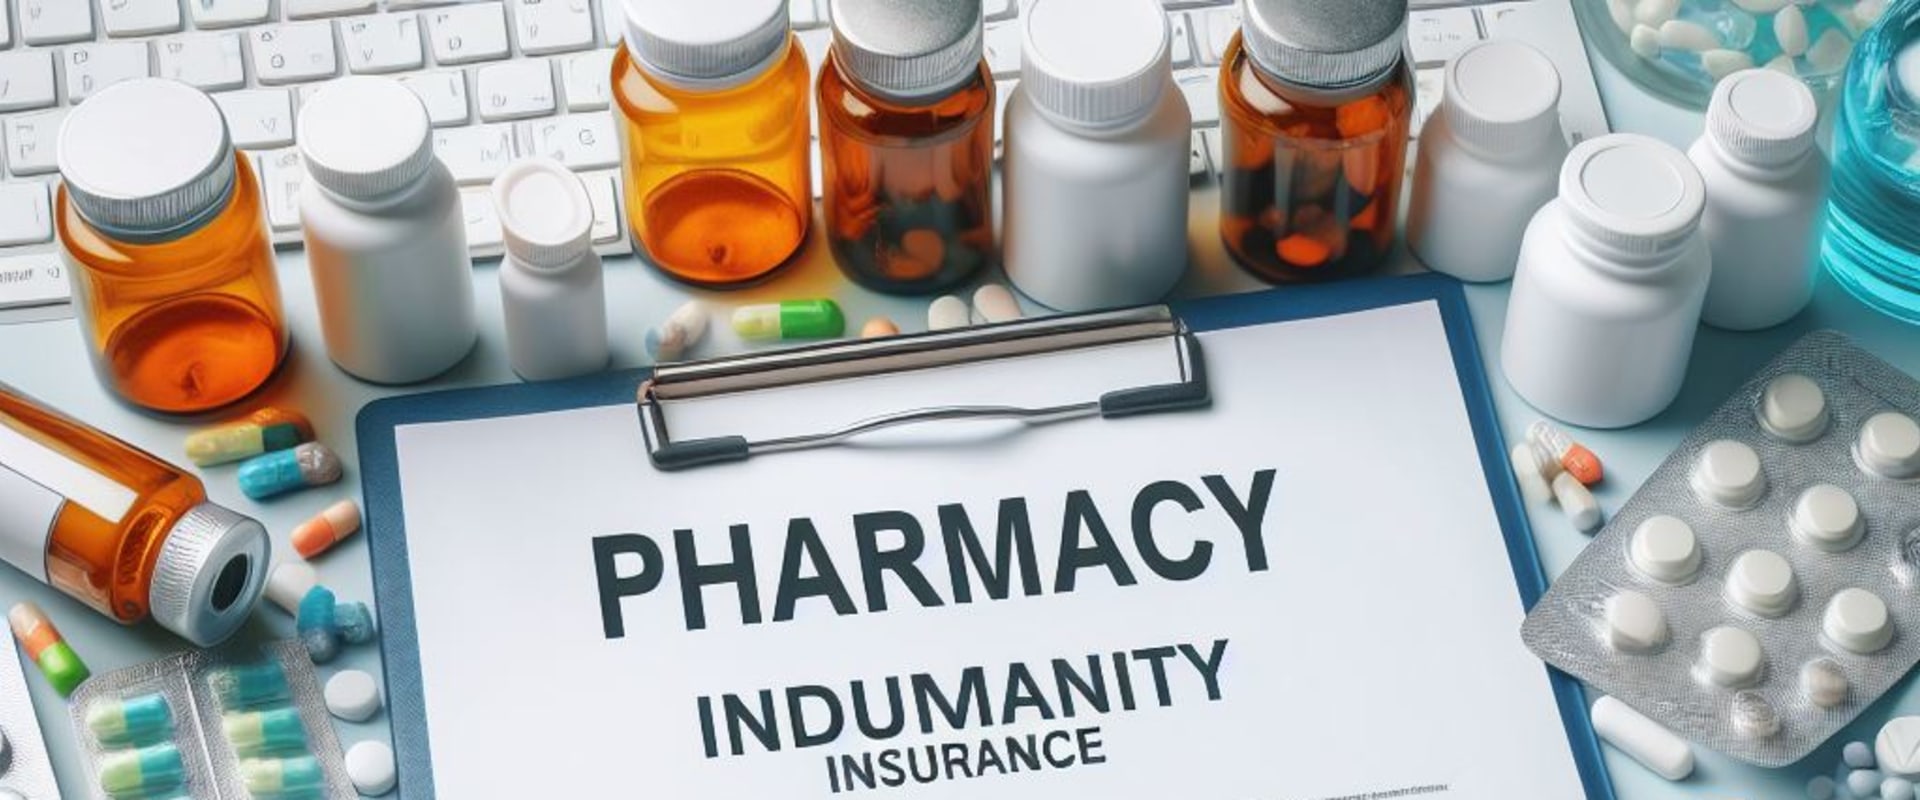 pharmacy indemnity insurance